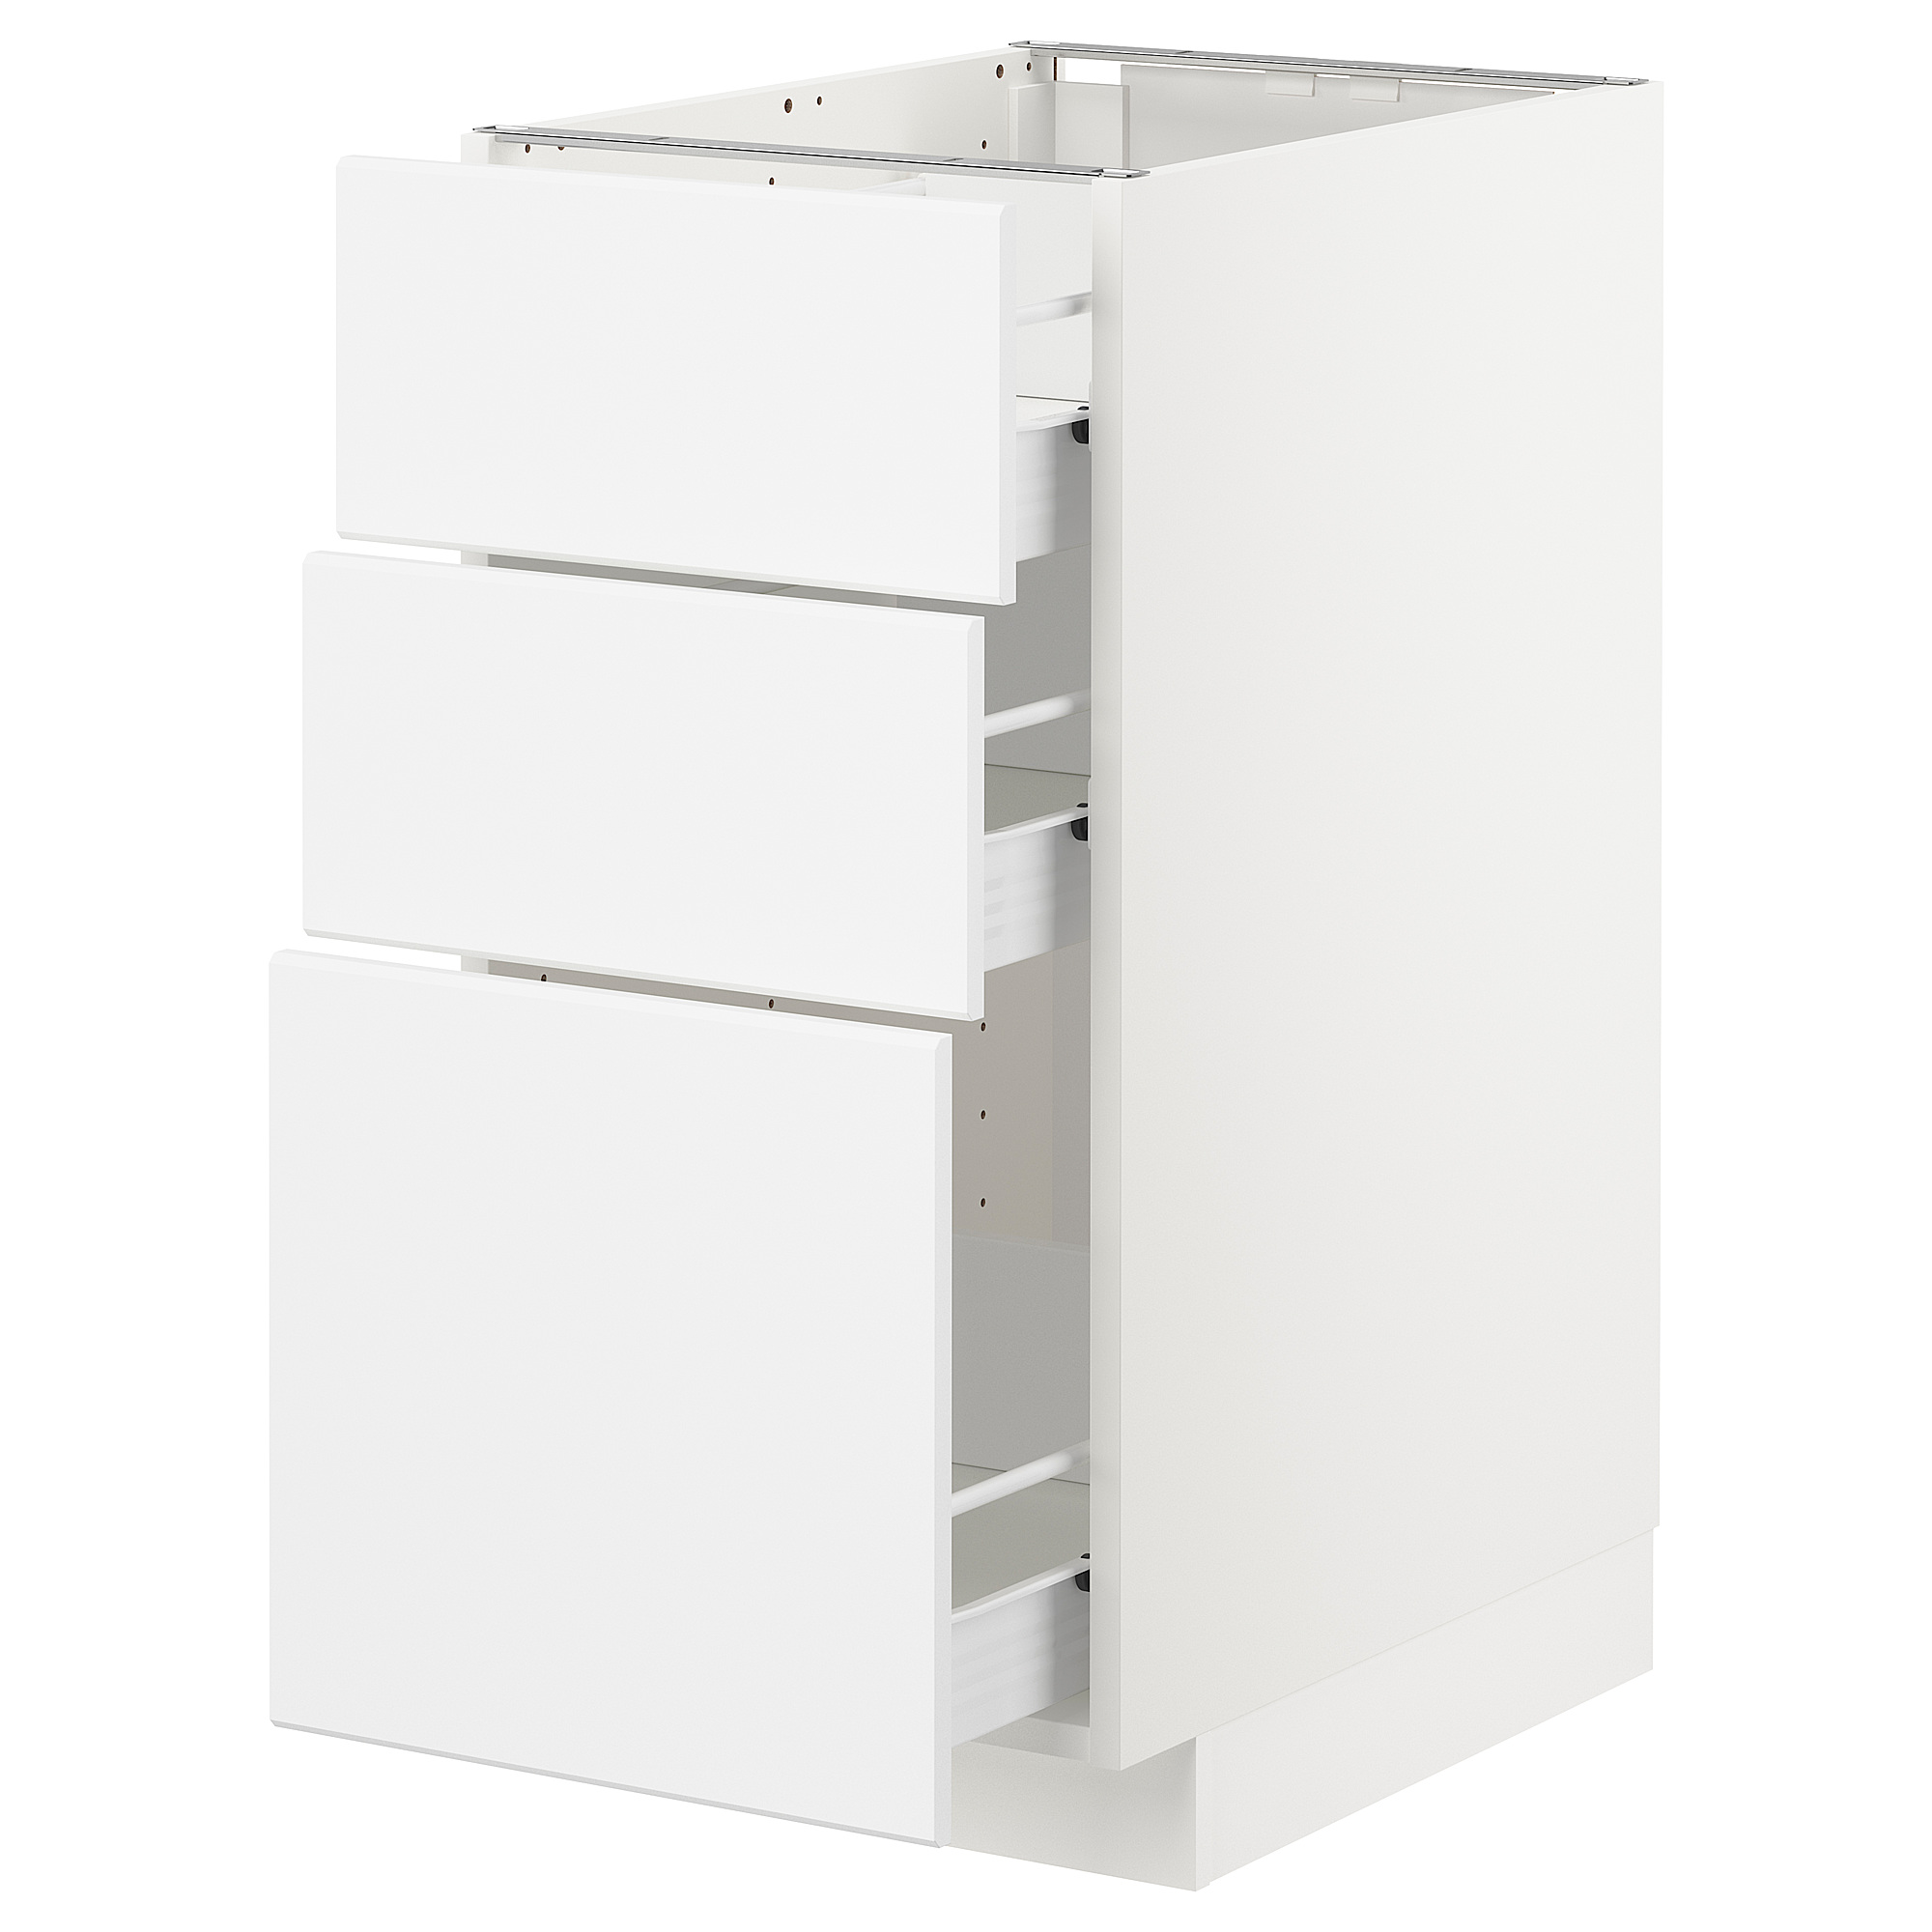 METOD/FÖRVARA base cabinet with 3 drawers